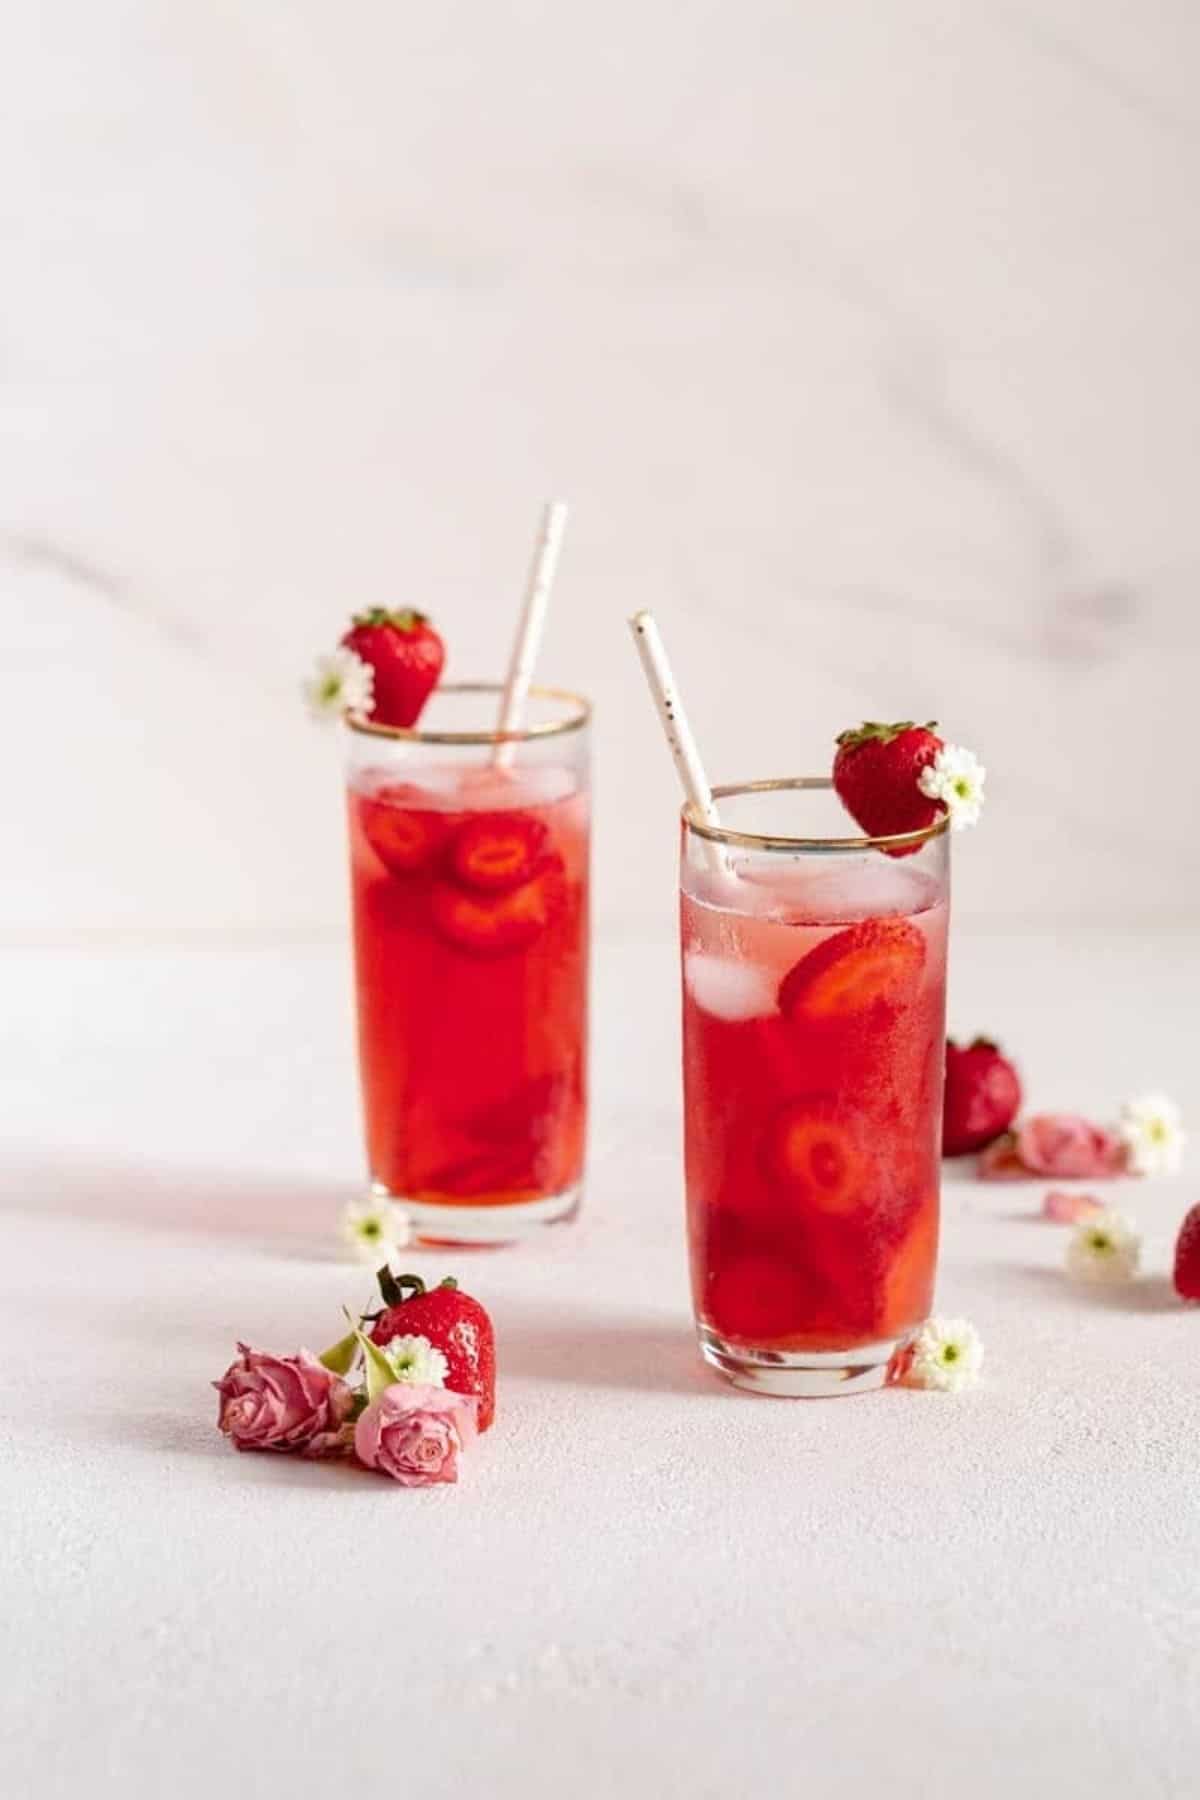 Straws in strawberry iced teas